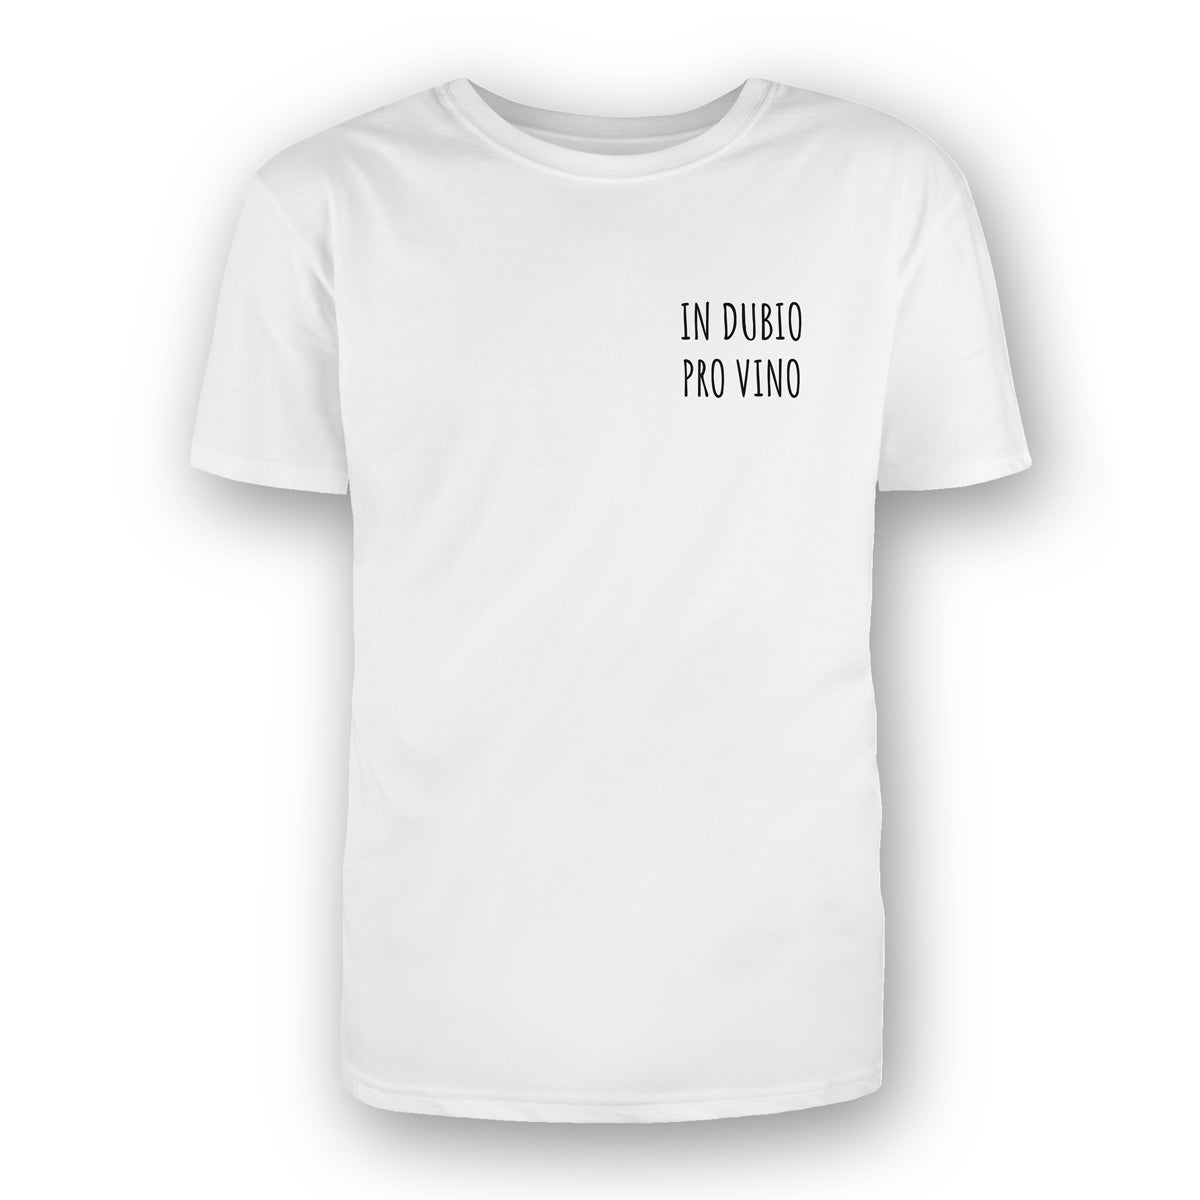 IN DUBIO PRO VINO - Unisex T-Shirt